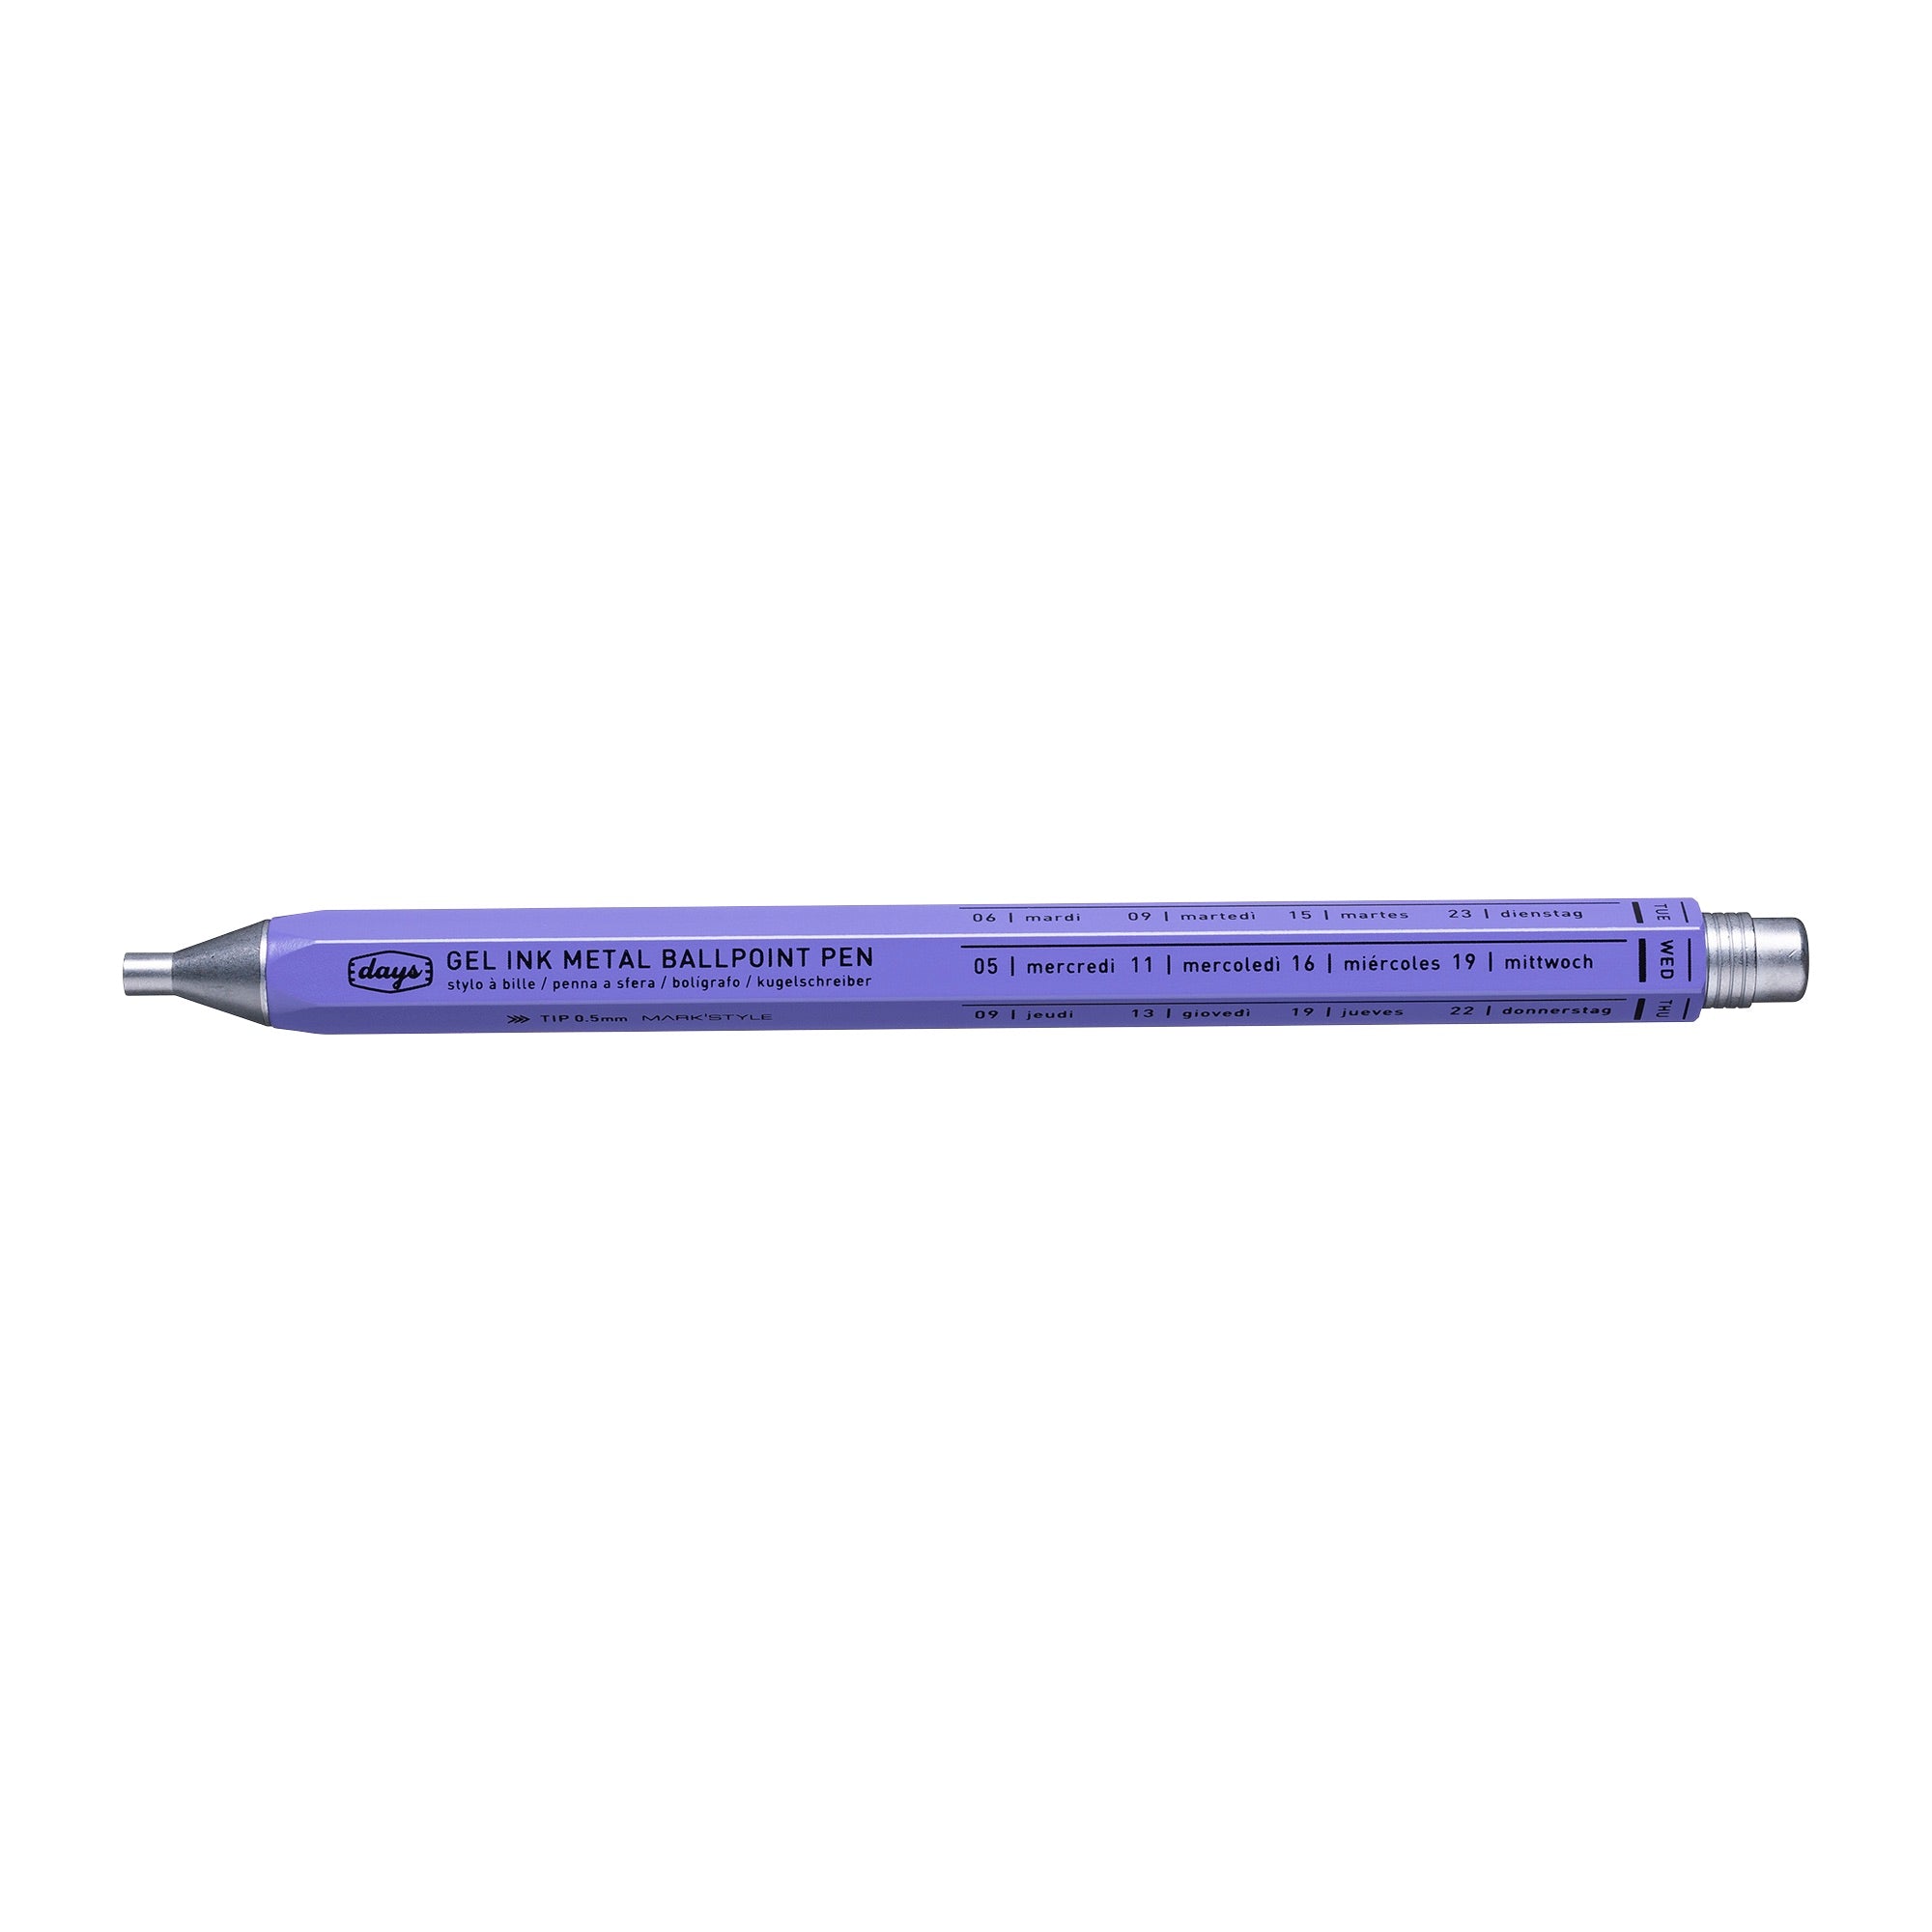 Gel Metal Ballpoint Pen | MARK'S STYLE | DAYS | Purple